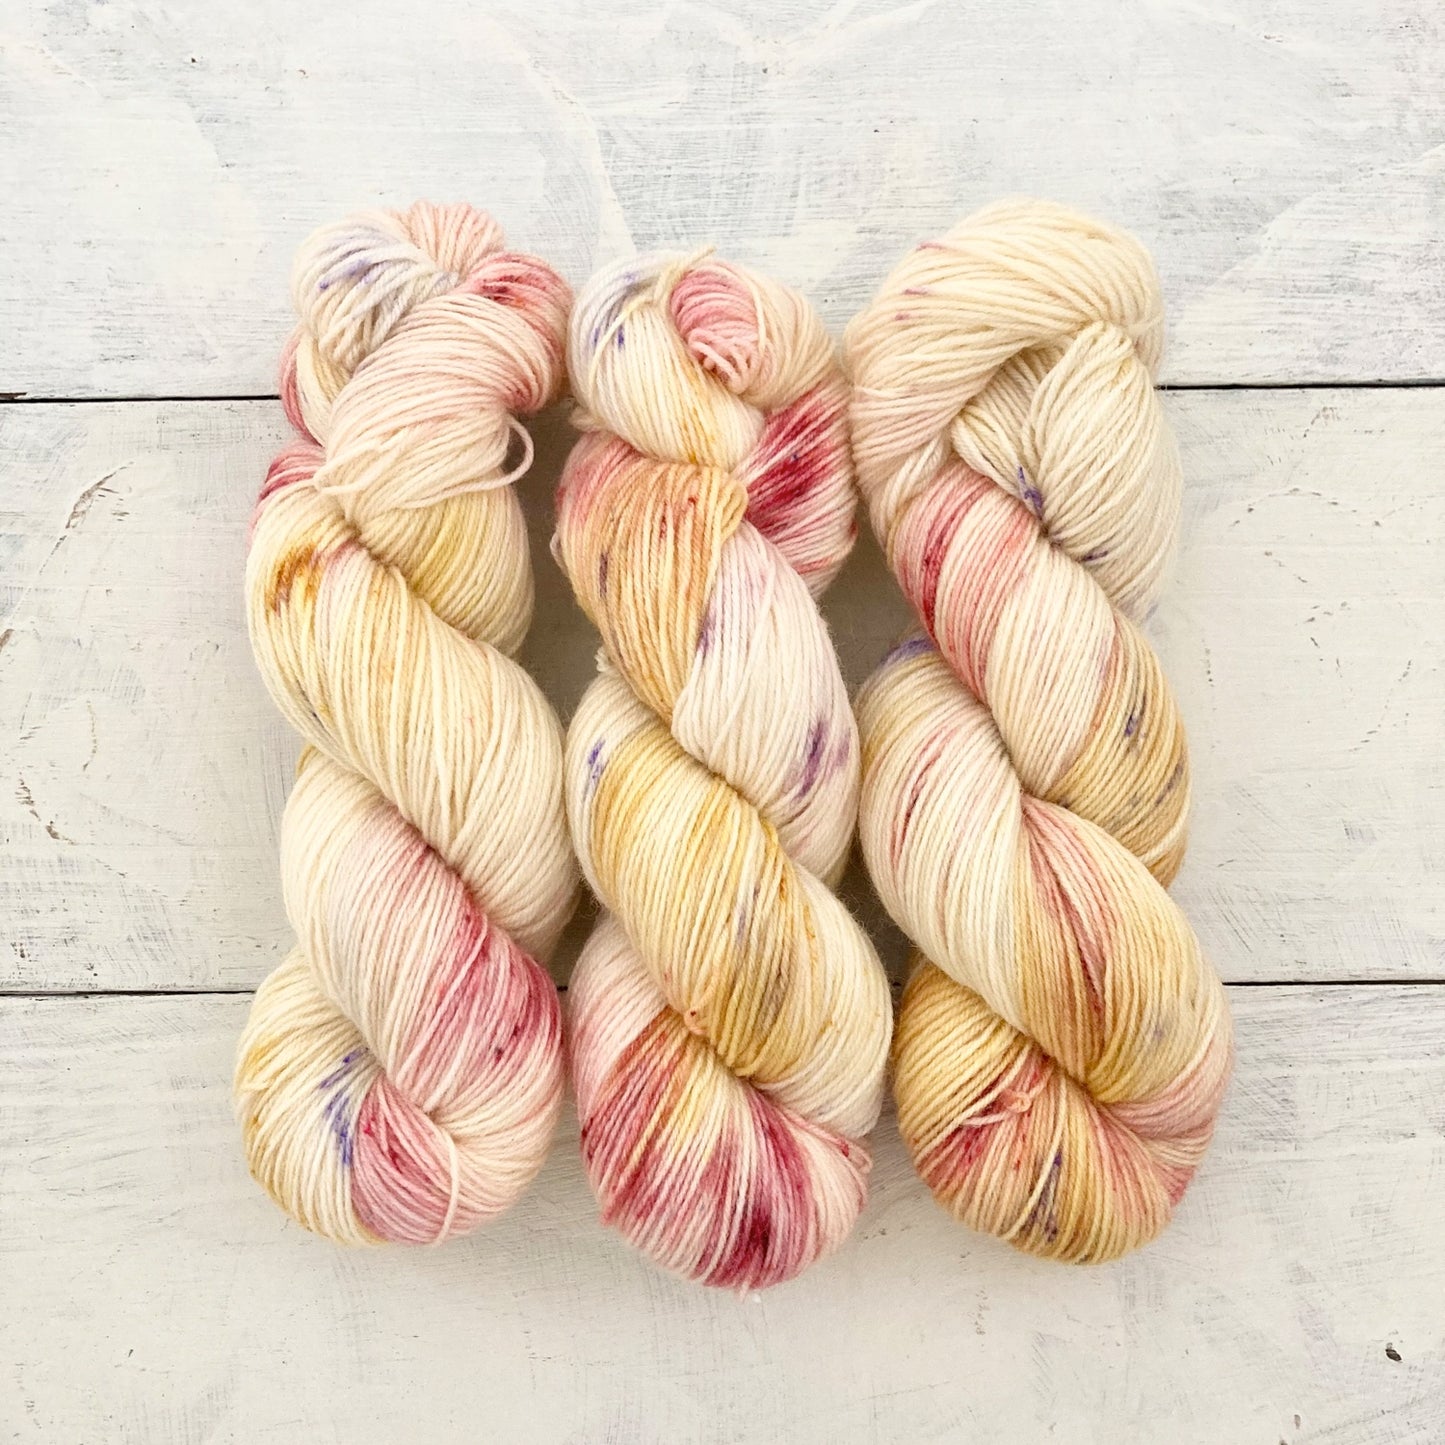 Hand-dyed yarn No.113 sock yarn "Frühling übers Jahr"